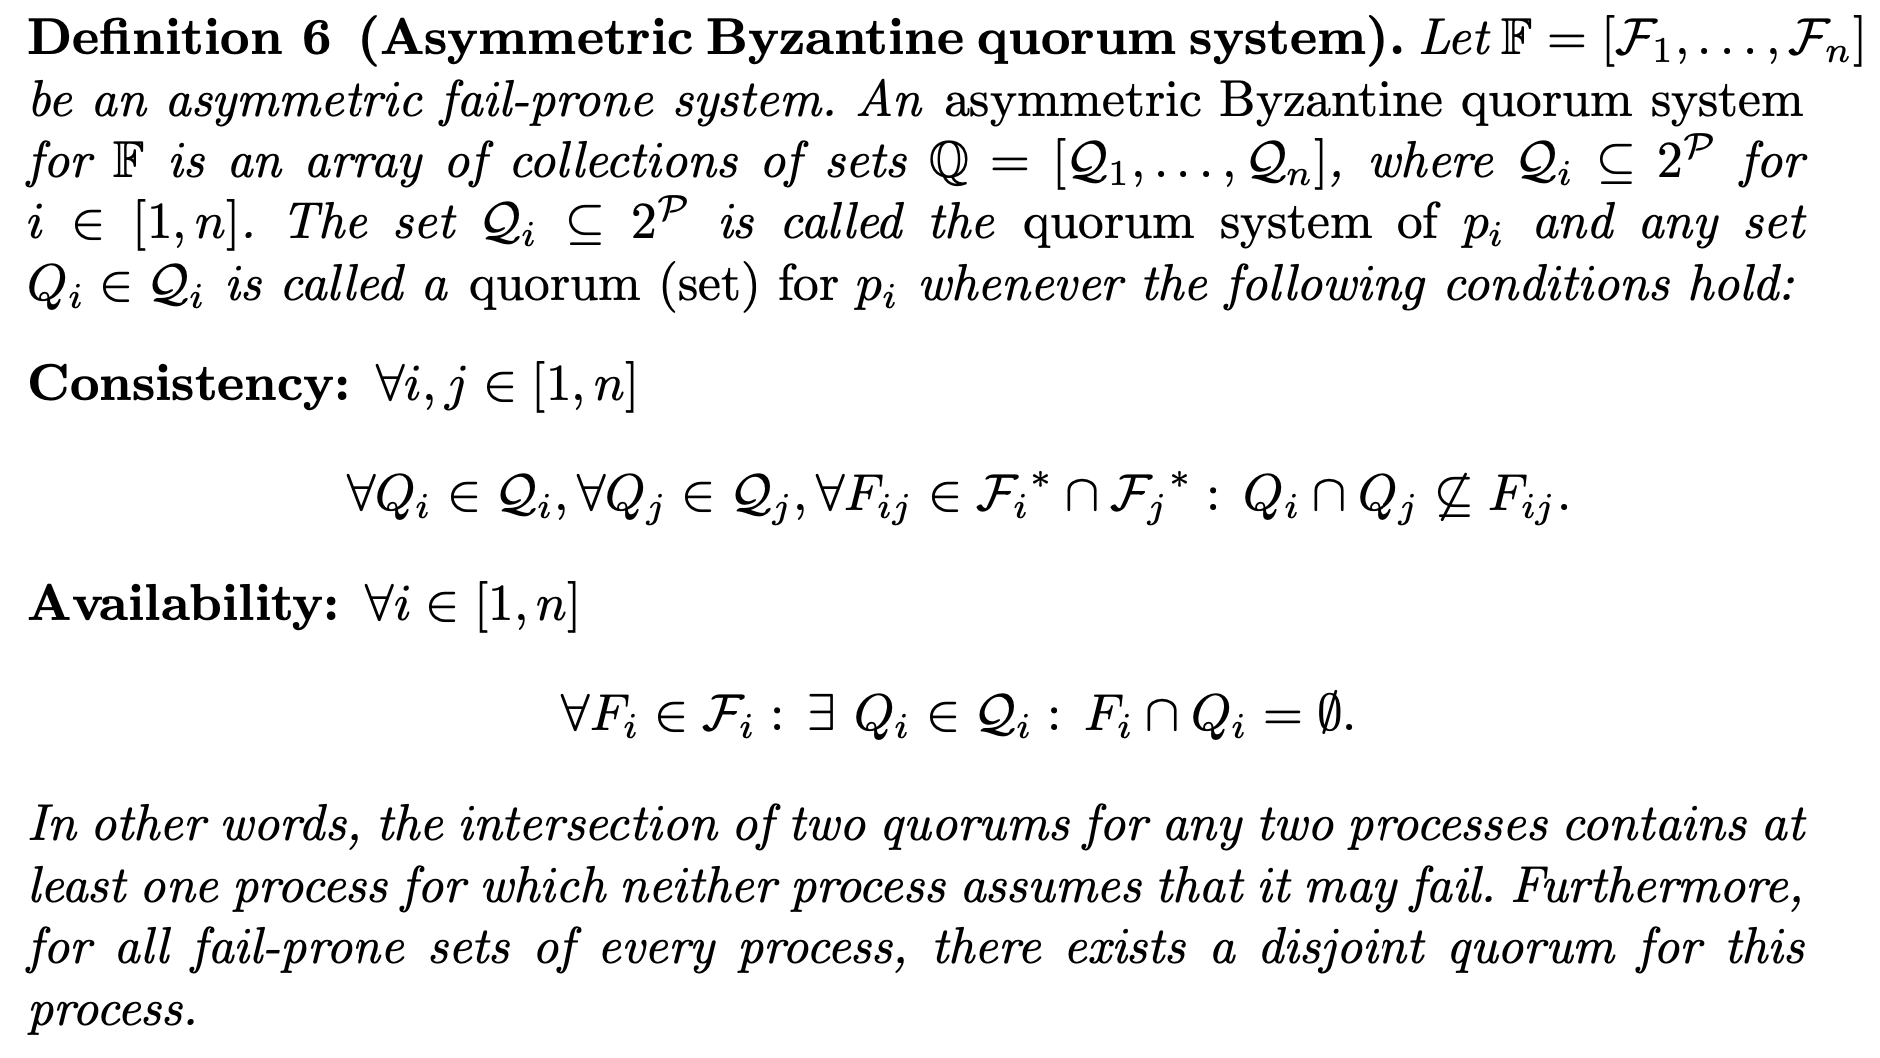 Asymmetric Byzantine quorum system